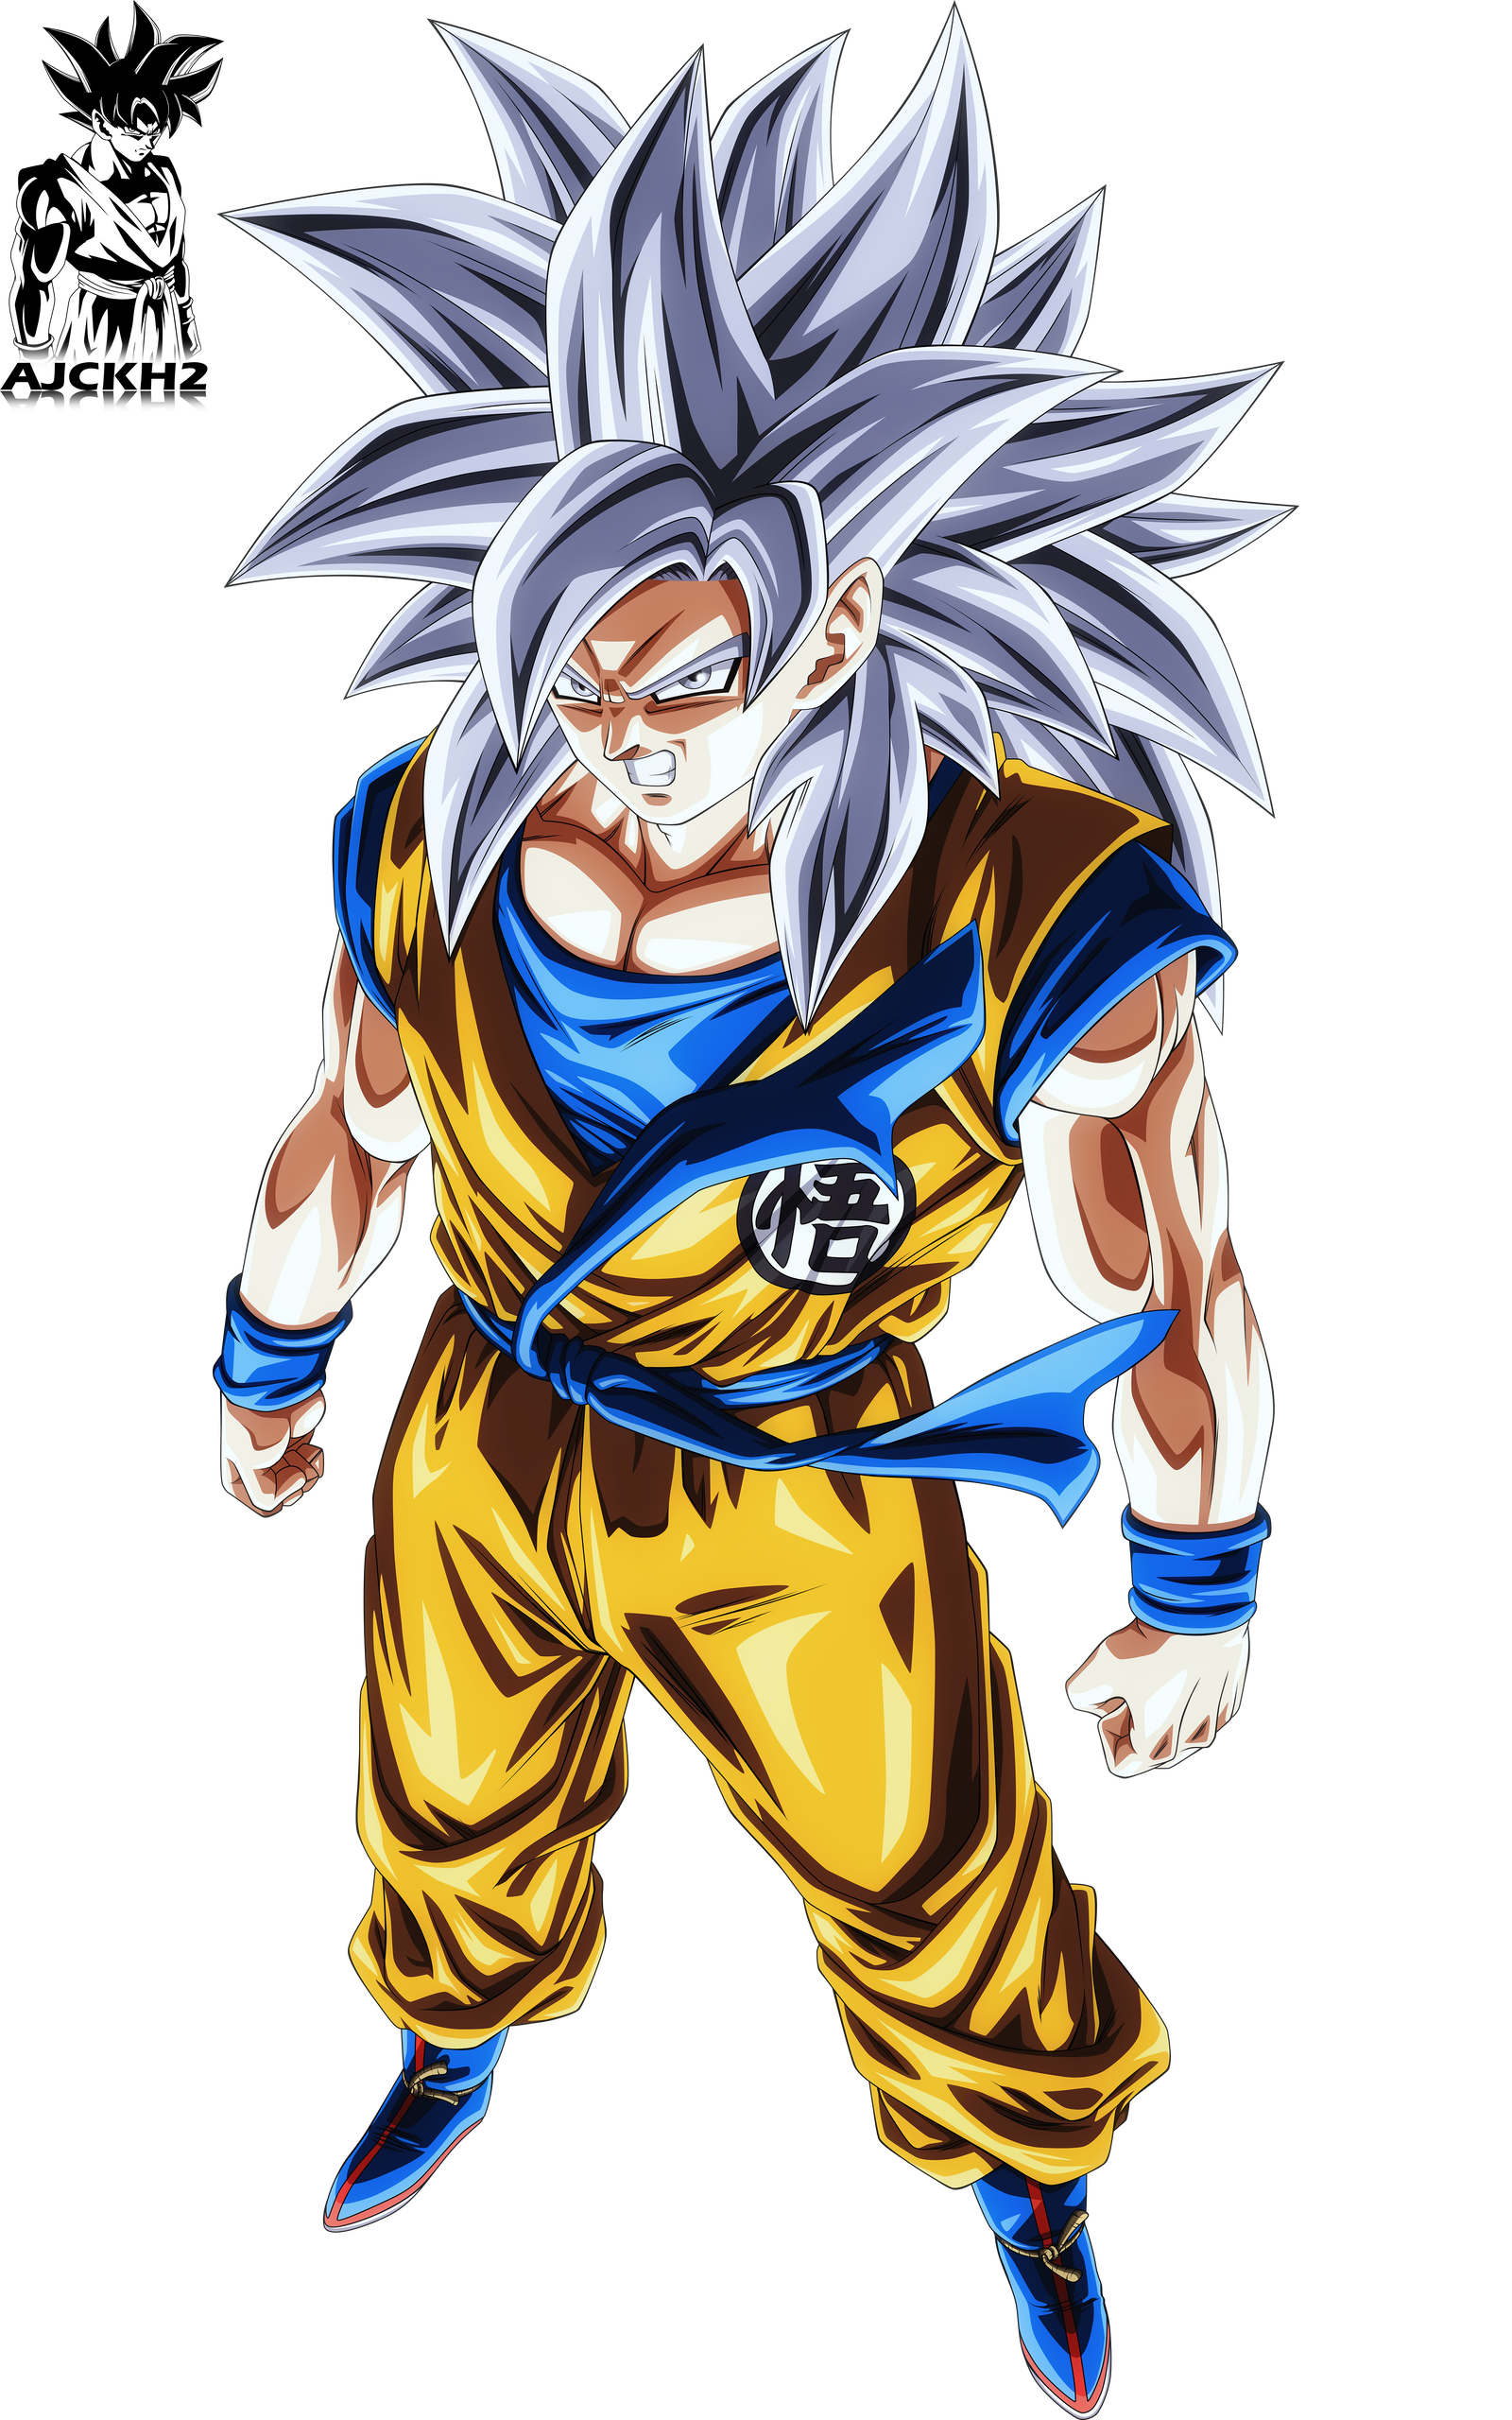 Super Saiyan God Blue Goku (Resurrection 'F'), an art print by Ty